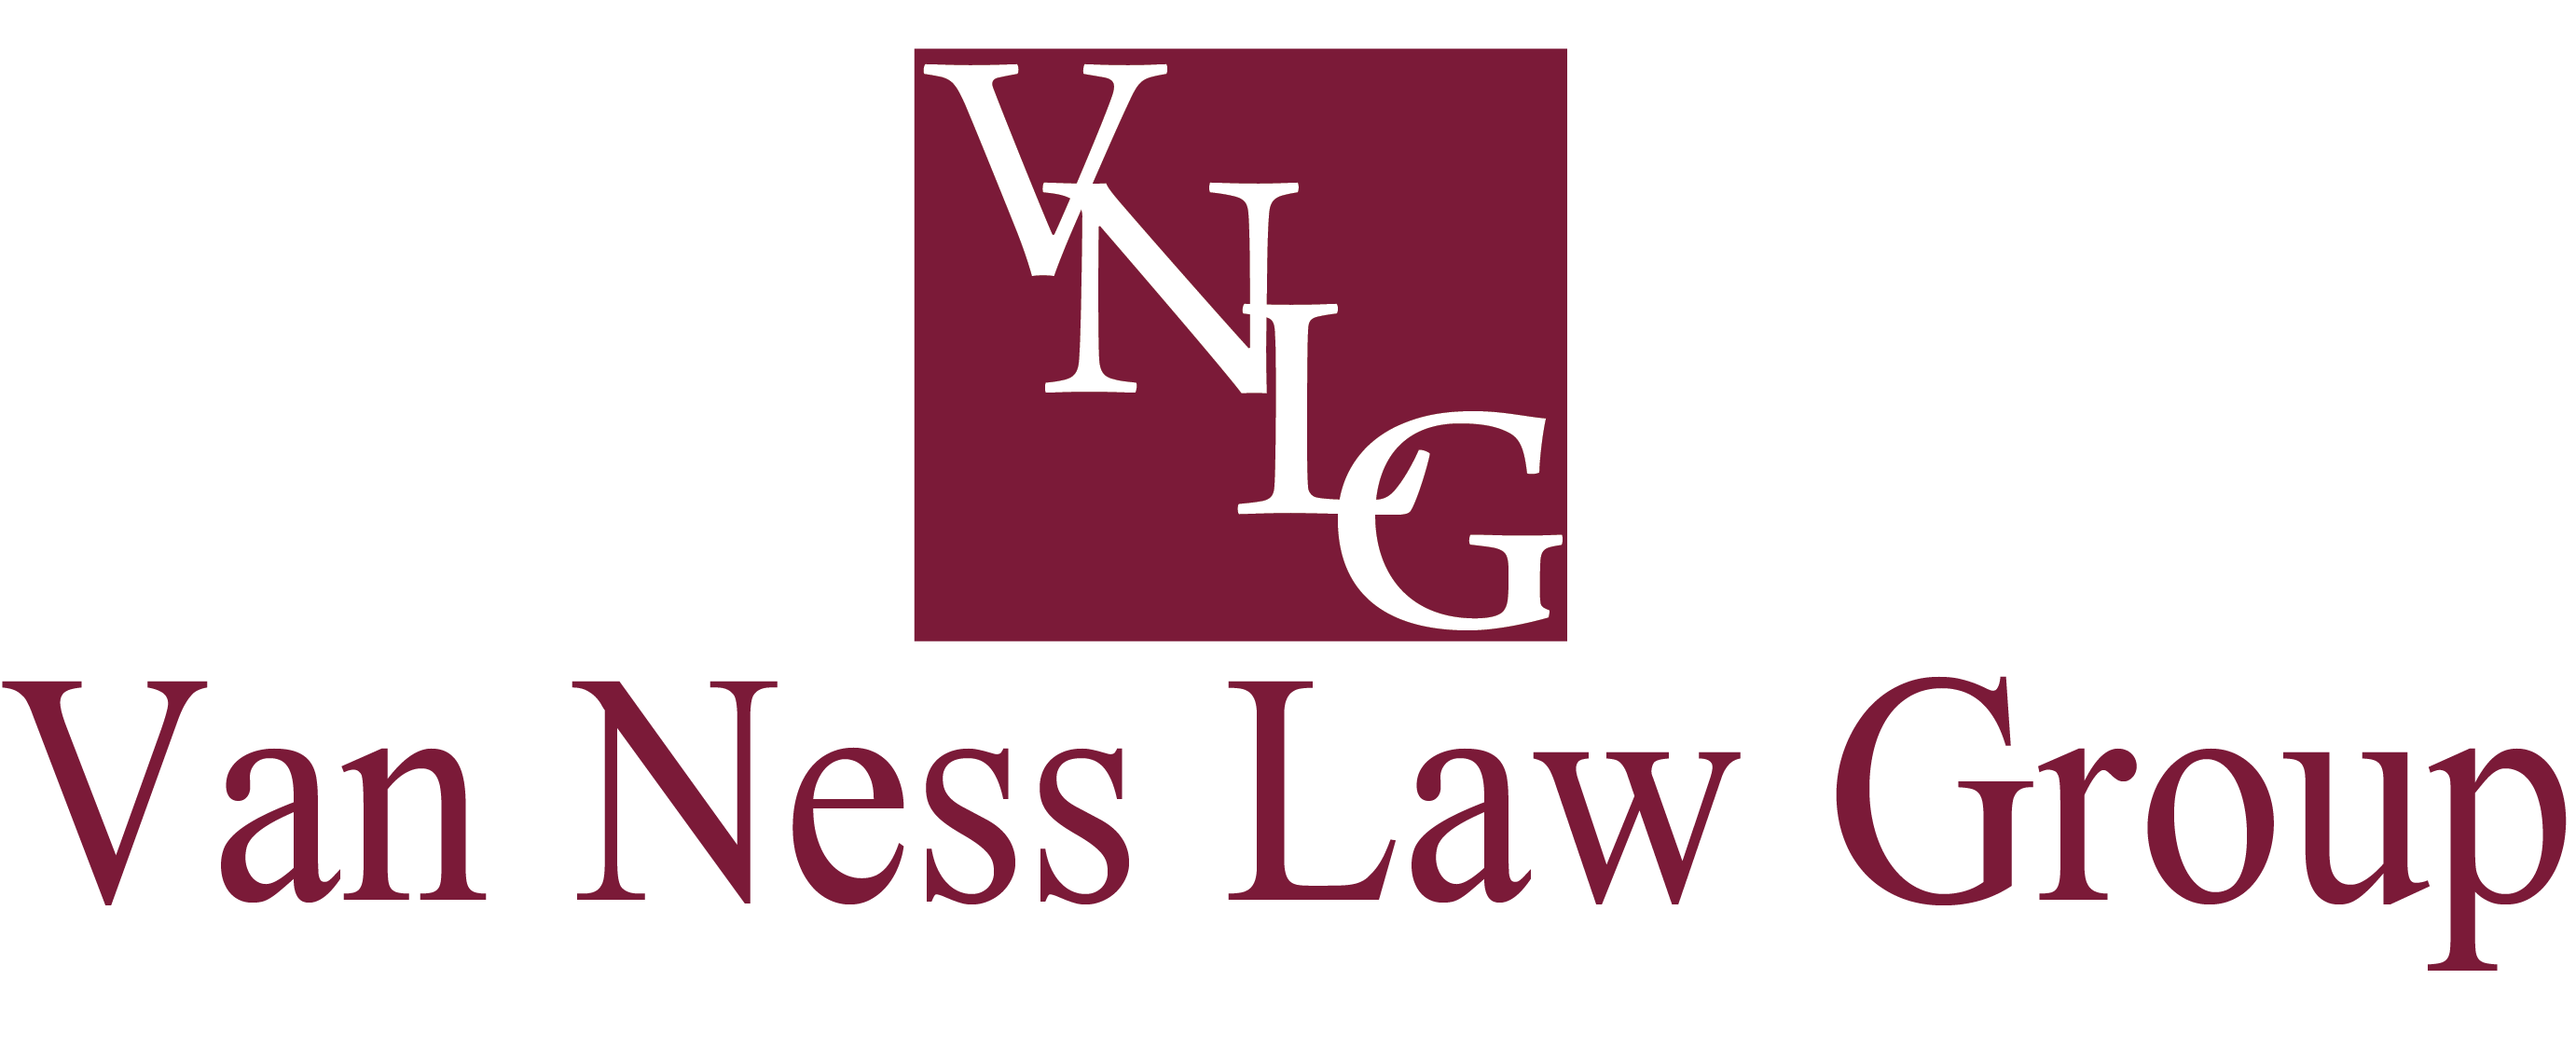 Van Ness Law Group